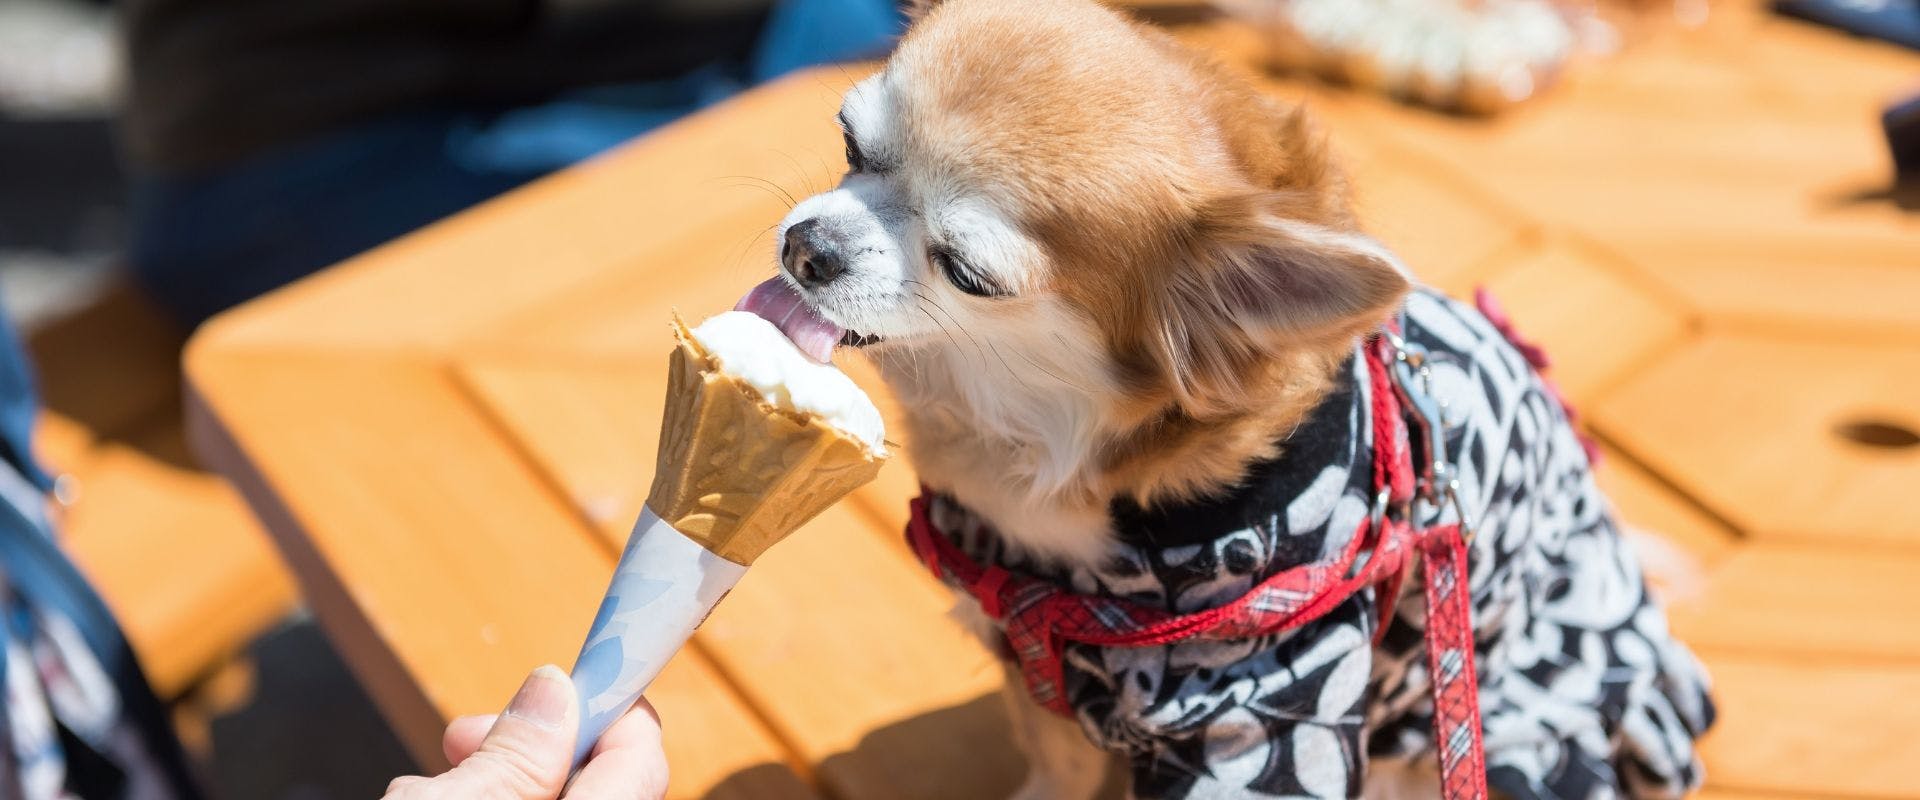 Chihuahua eating ice cream